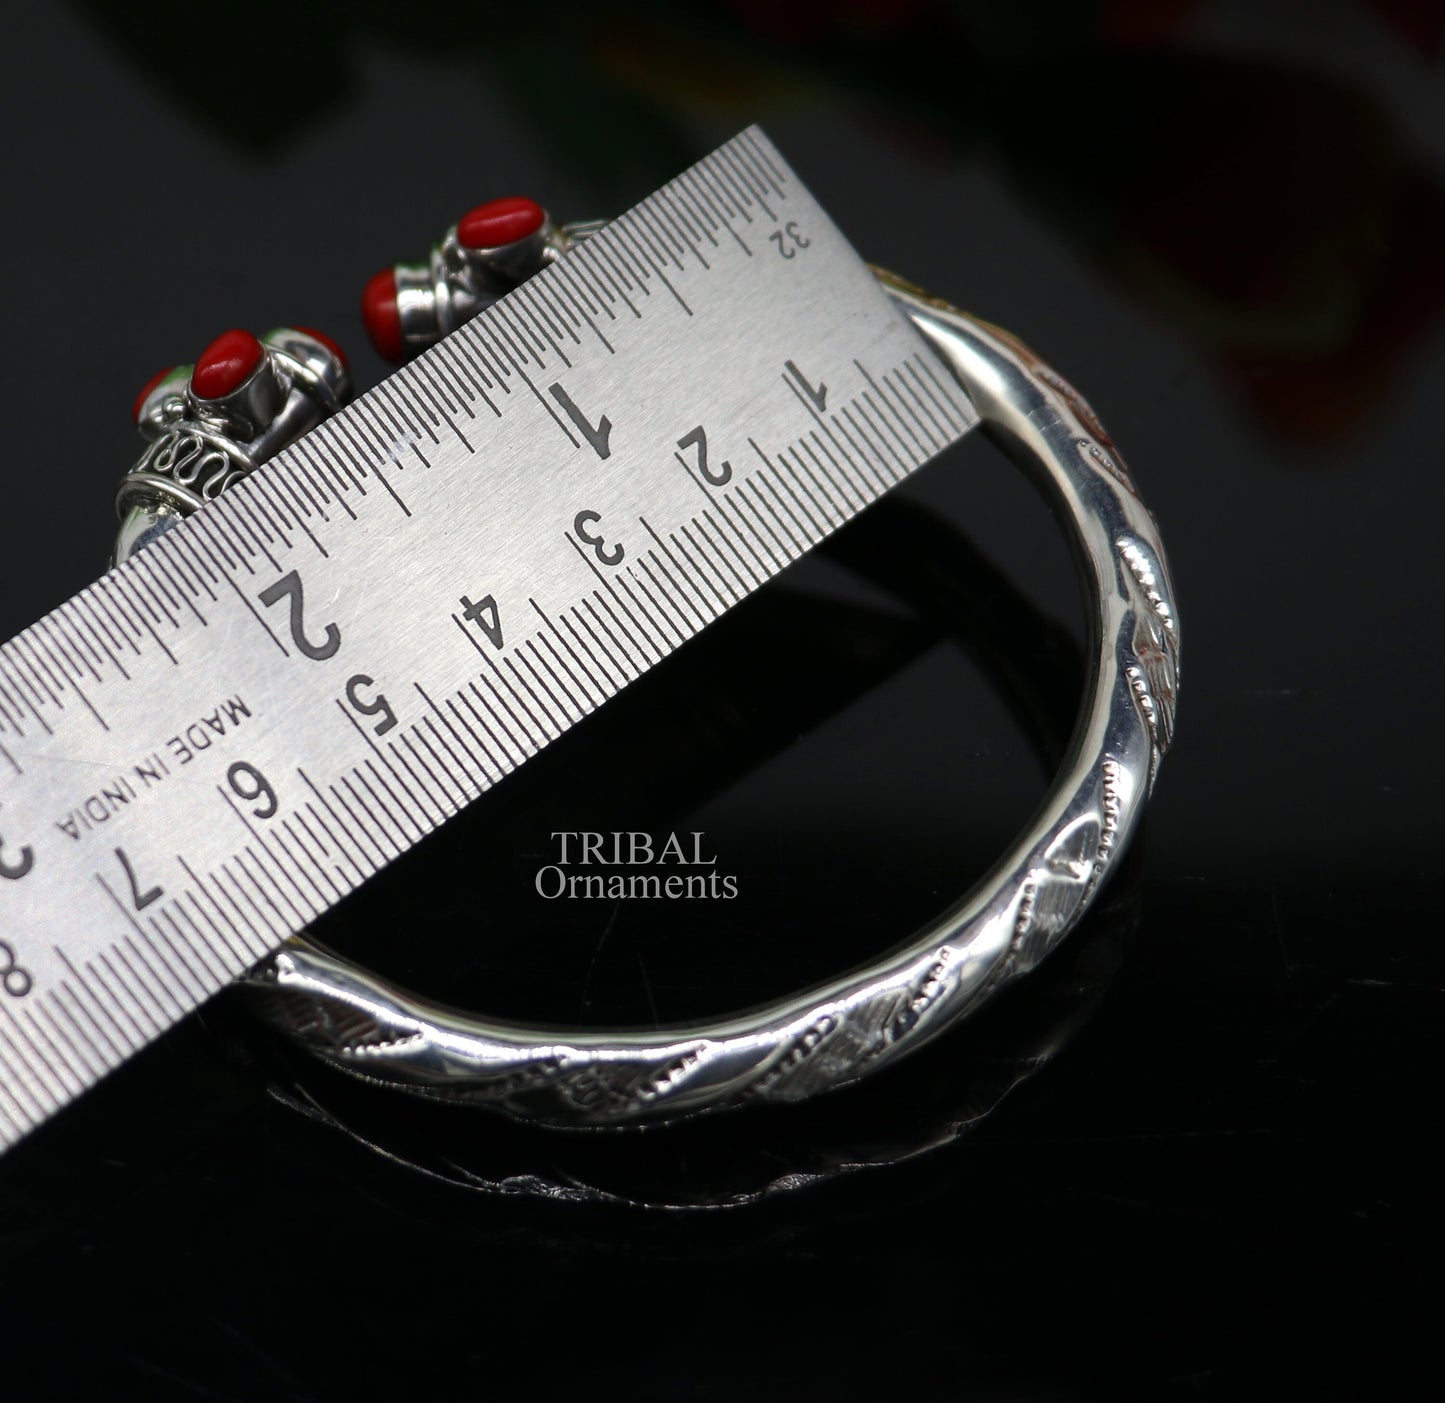 Designer 925 sterling silver handmade gorgeous red stone antique design bangle bracelet kada, fabulous wrist jewelry tribal jewelry nsk103 - TRIBAL ORNAMENTS